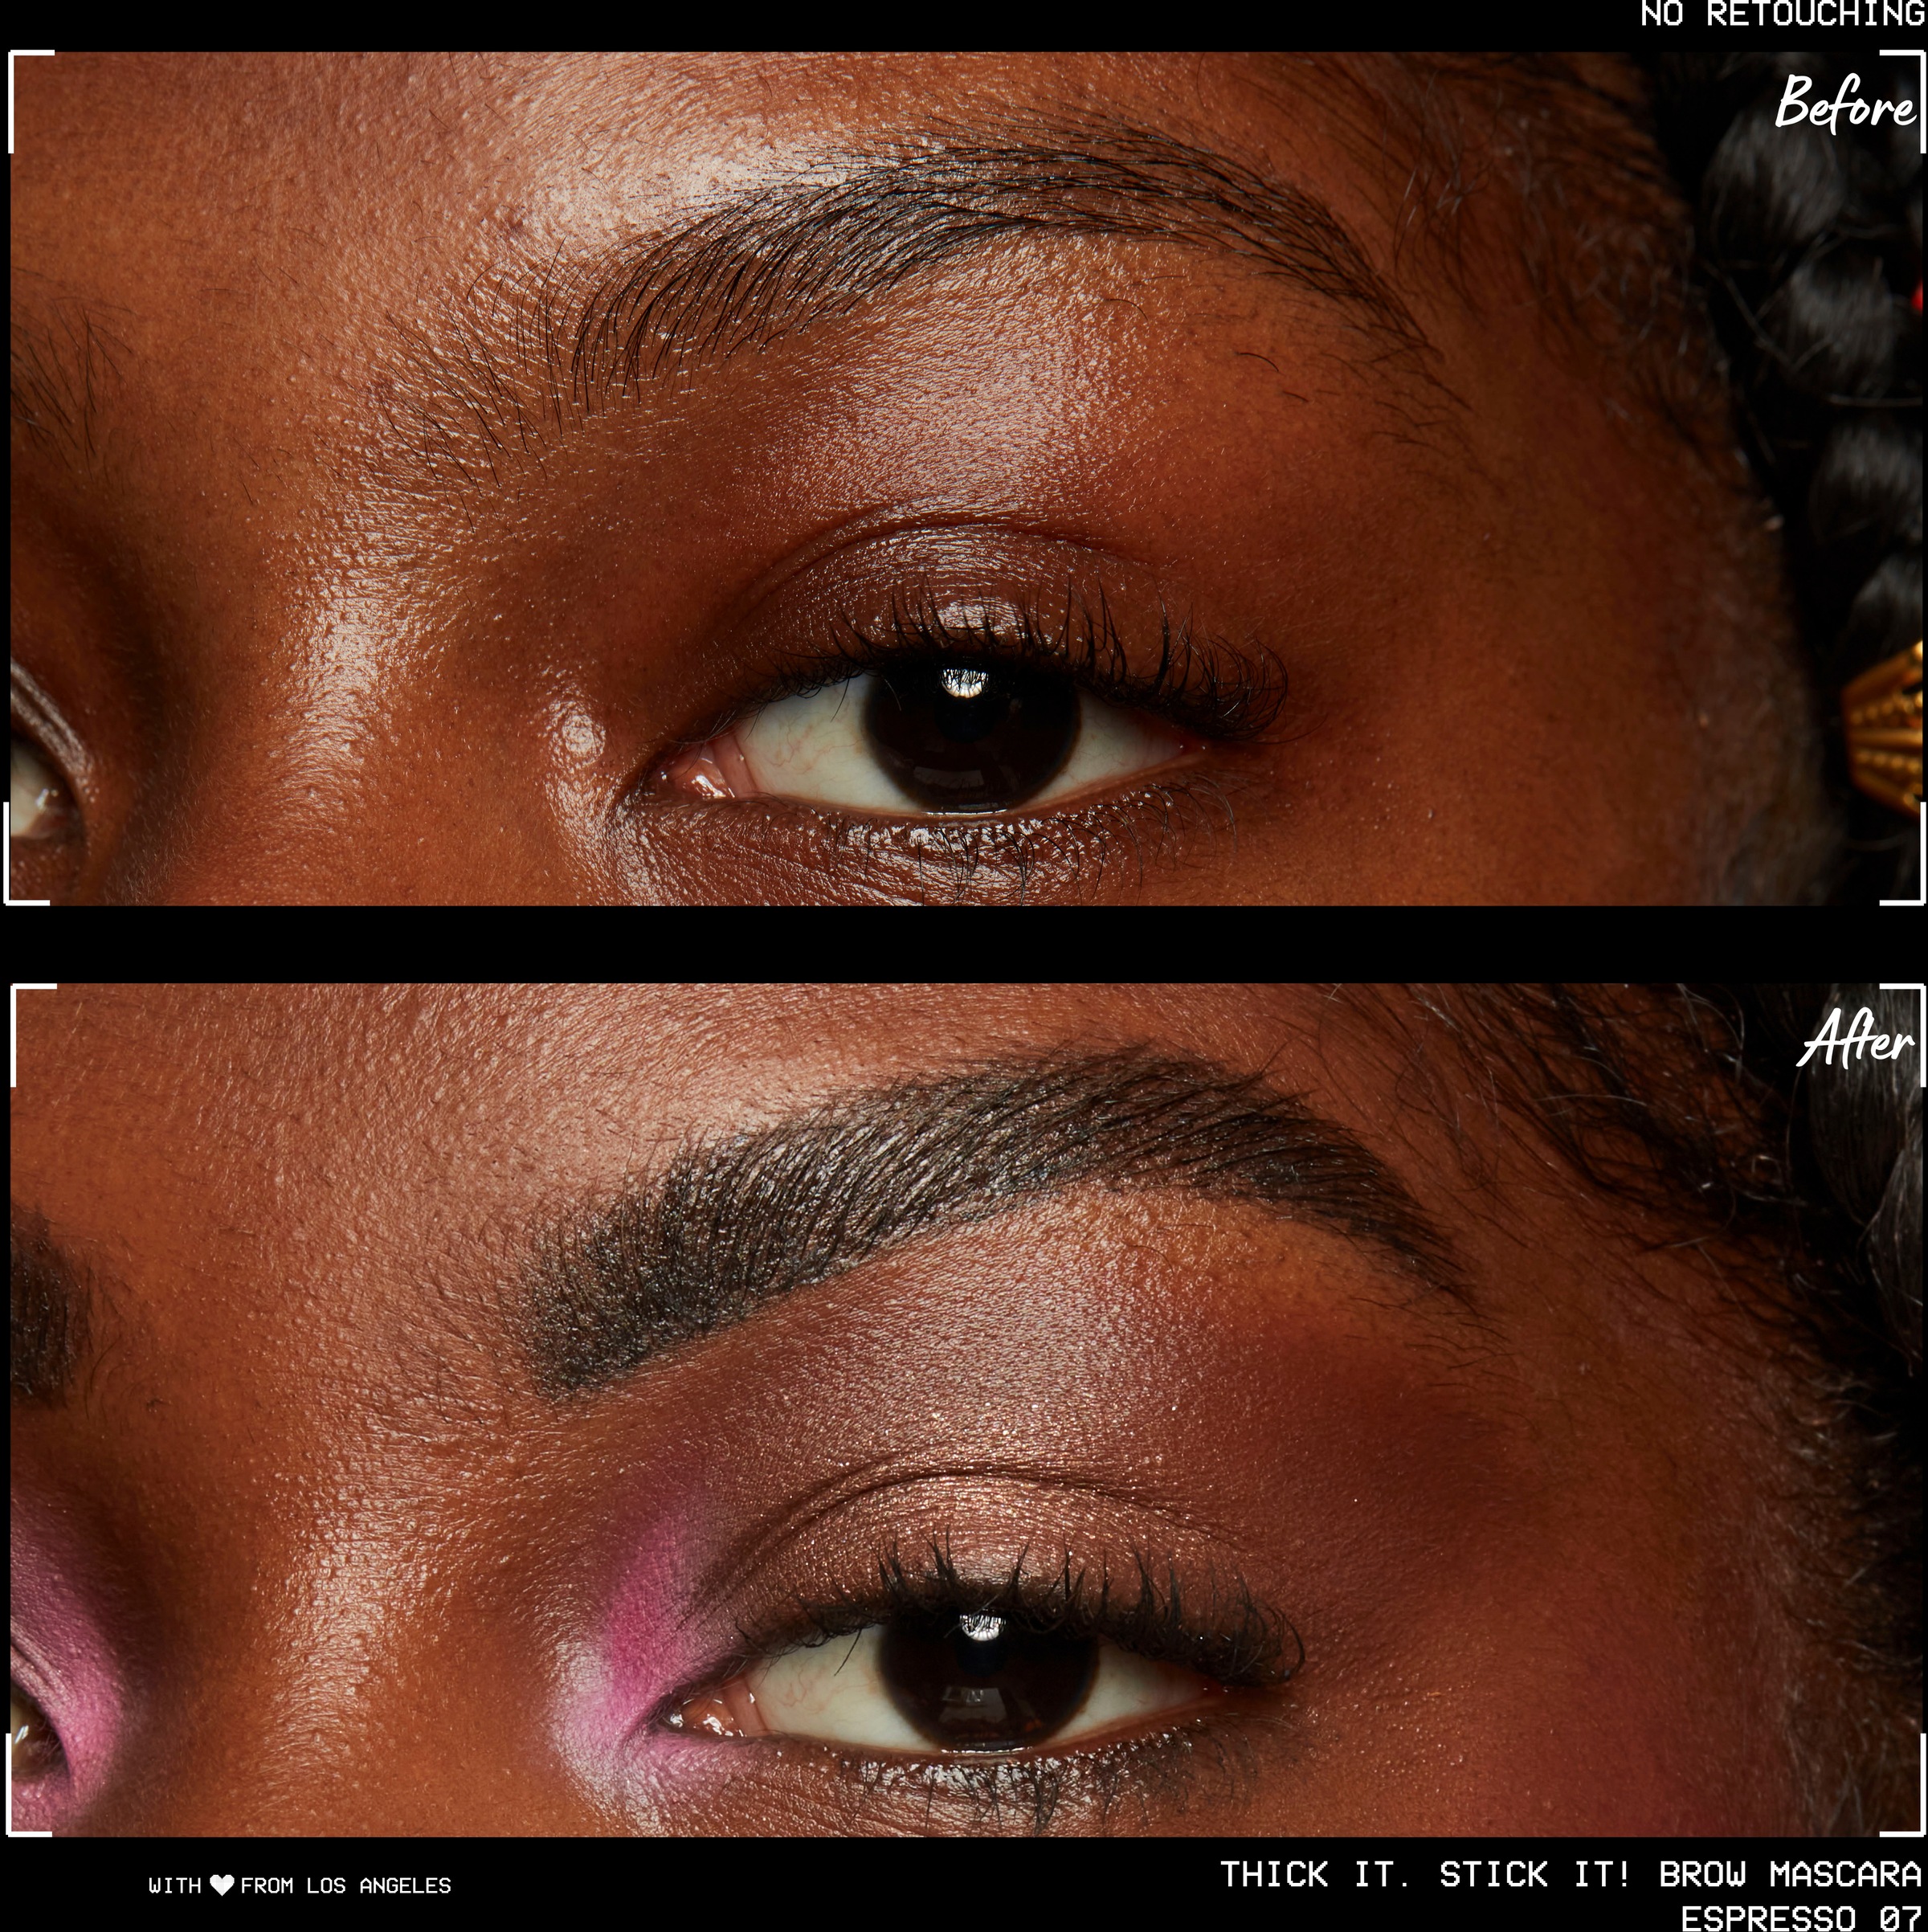 NYX Schmink-Set »NYX Professional Makeup Bold Eye Contact Set«